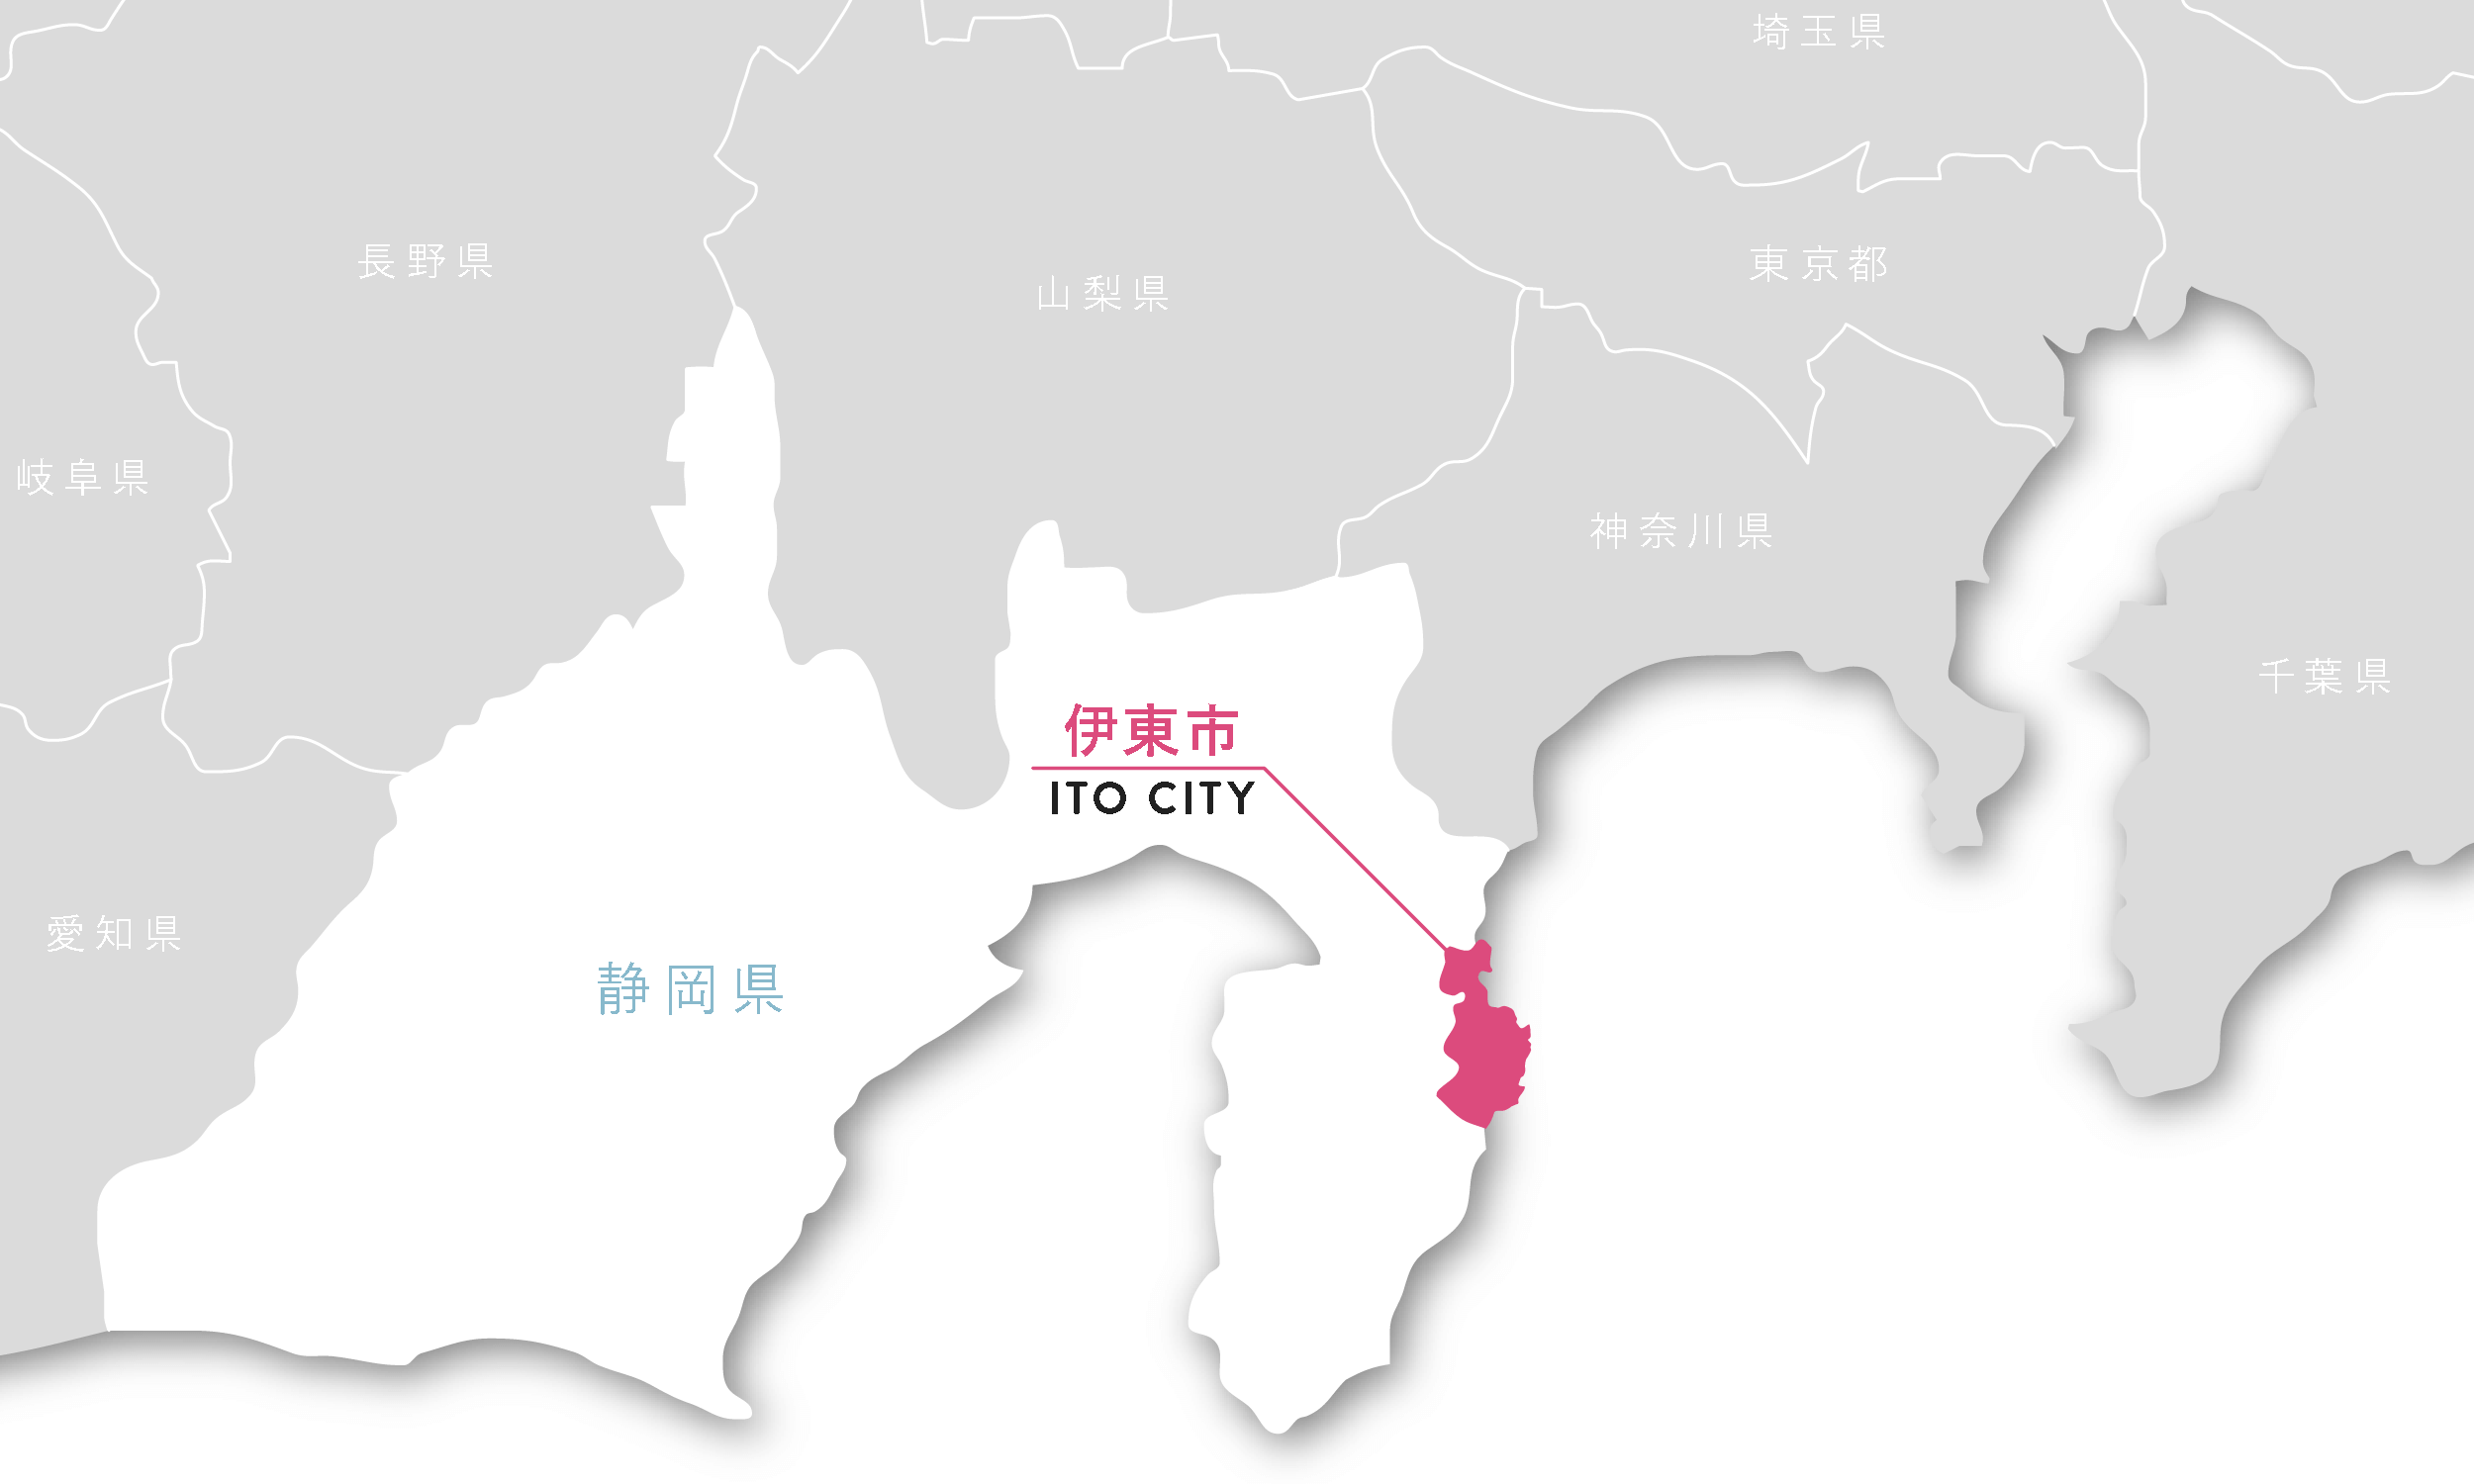 伊東市は静岡県 伊豆半島の東部に位置